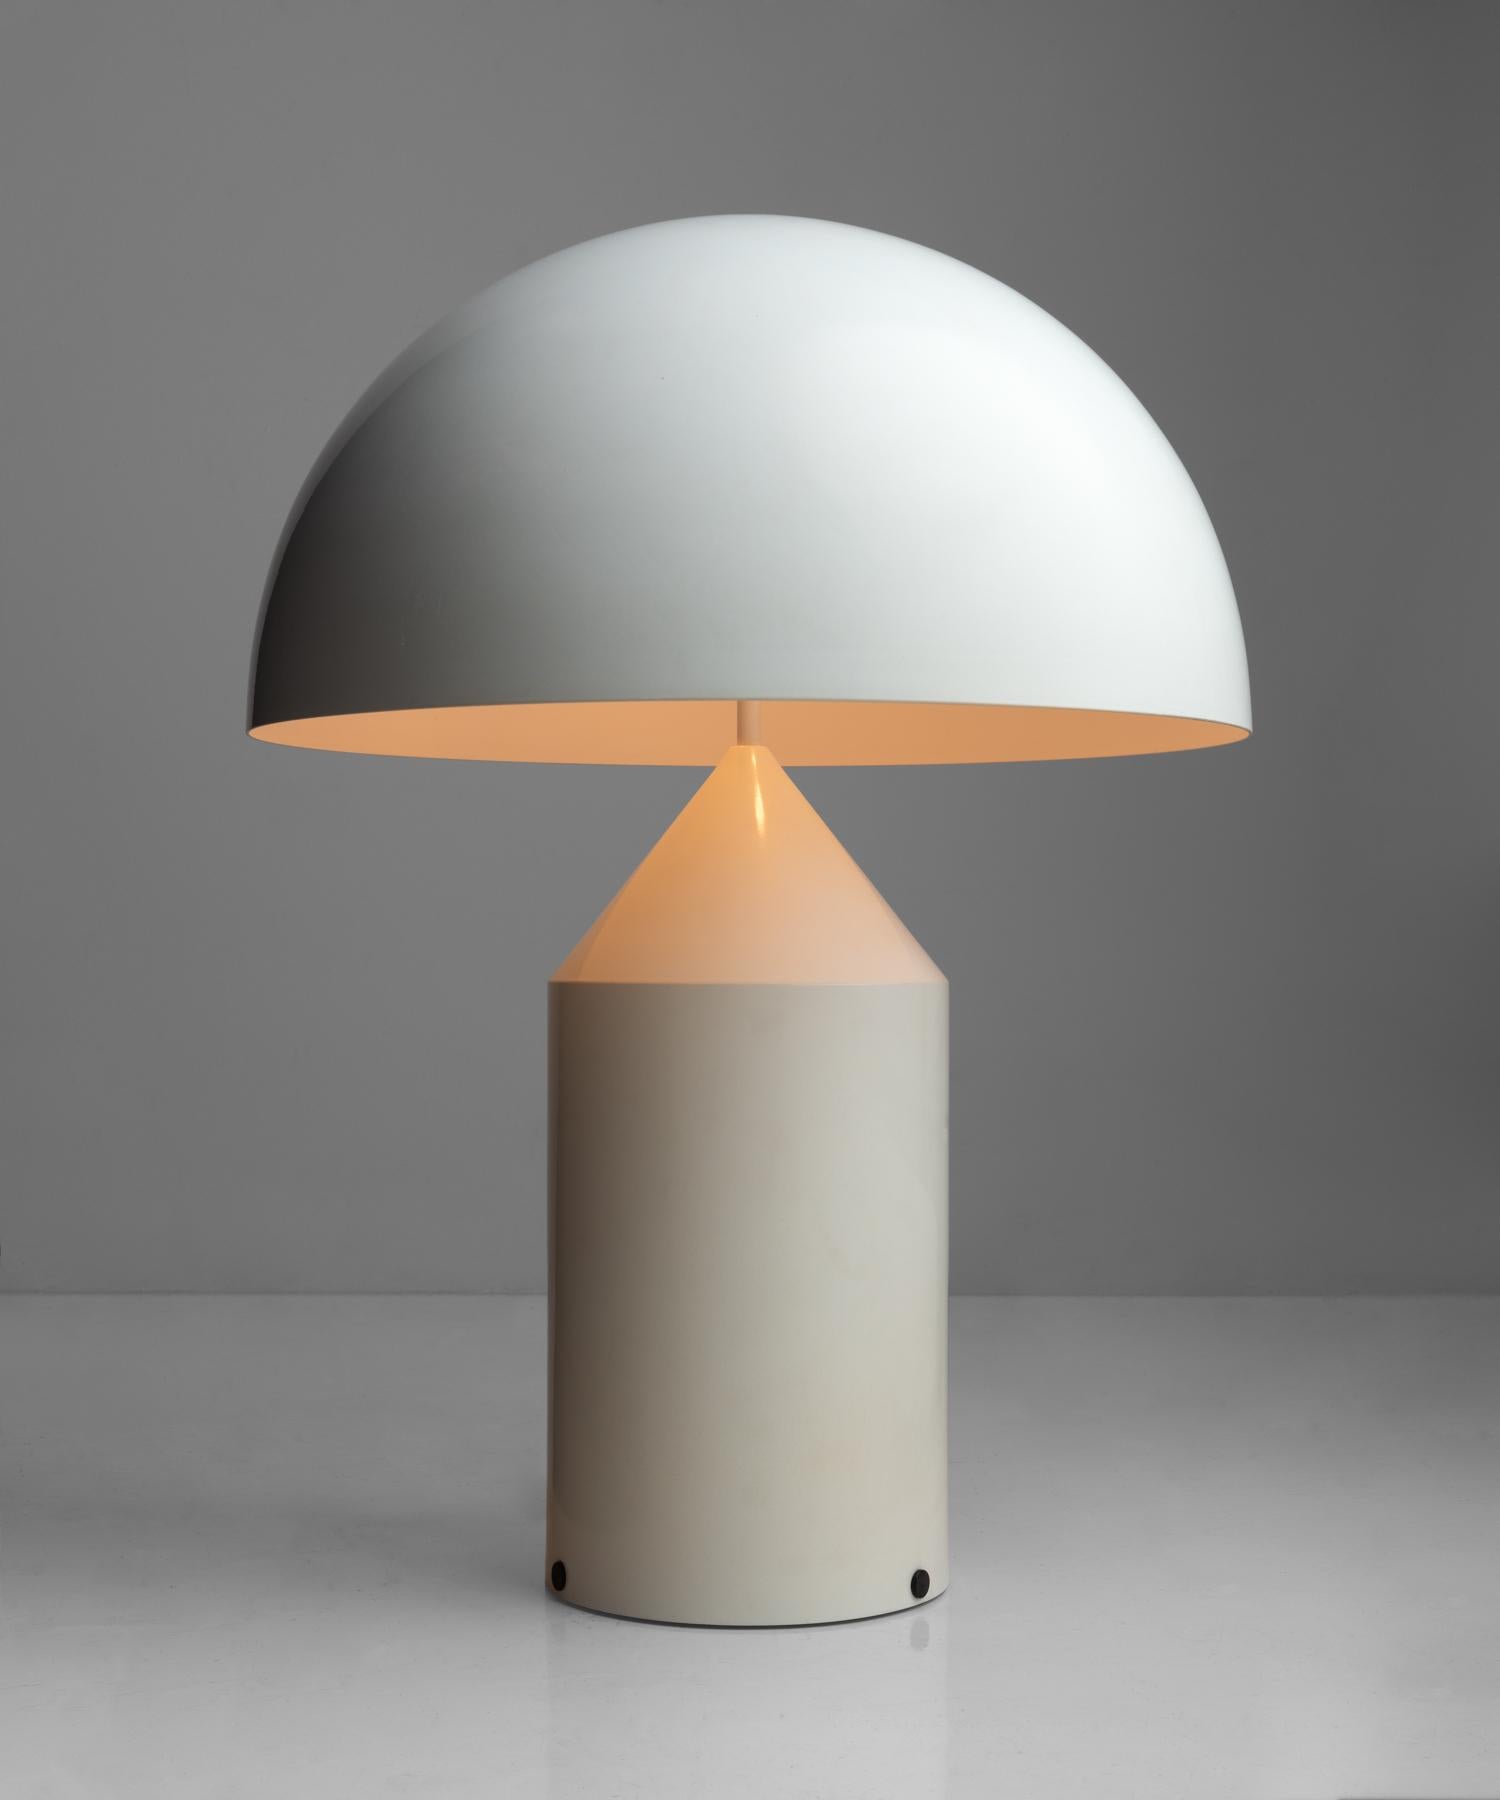 Table lamp by Vico Magistretti, Italy, circa 1977

Composed of aluminum and polyurethane plastic, designed in 1977 by Vico Magistretti, in original white finish.